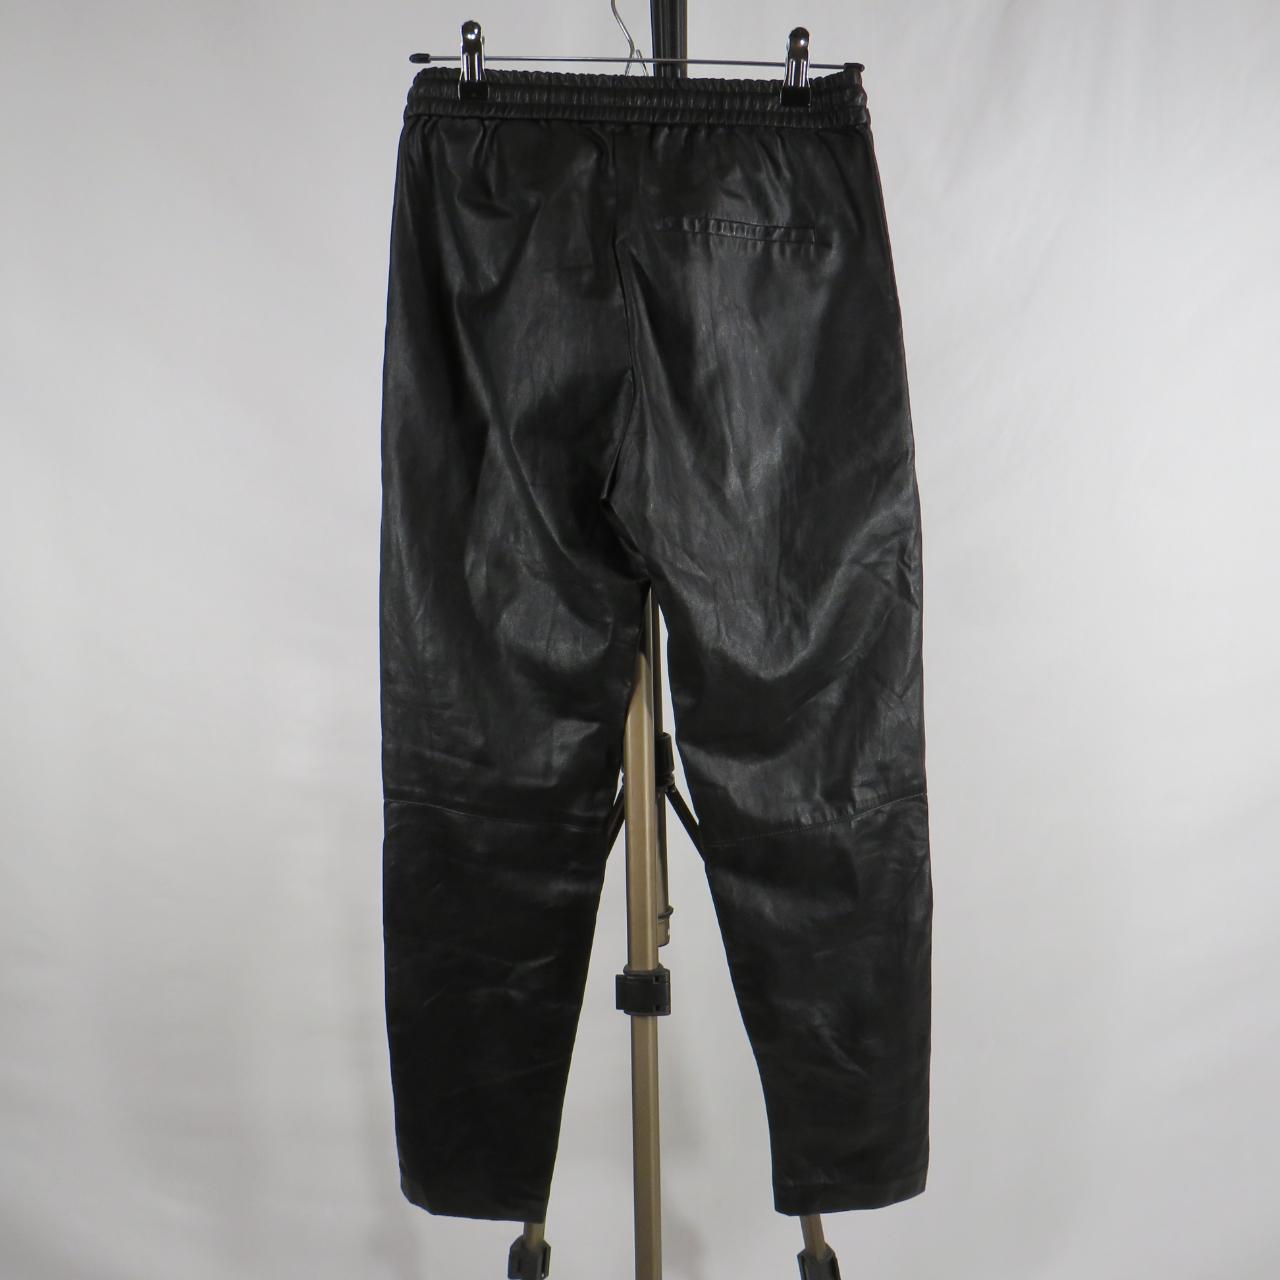 H&M leather pants with drawstring elastic waist, 2... - Depop